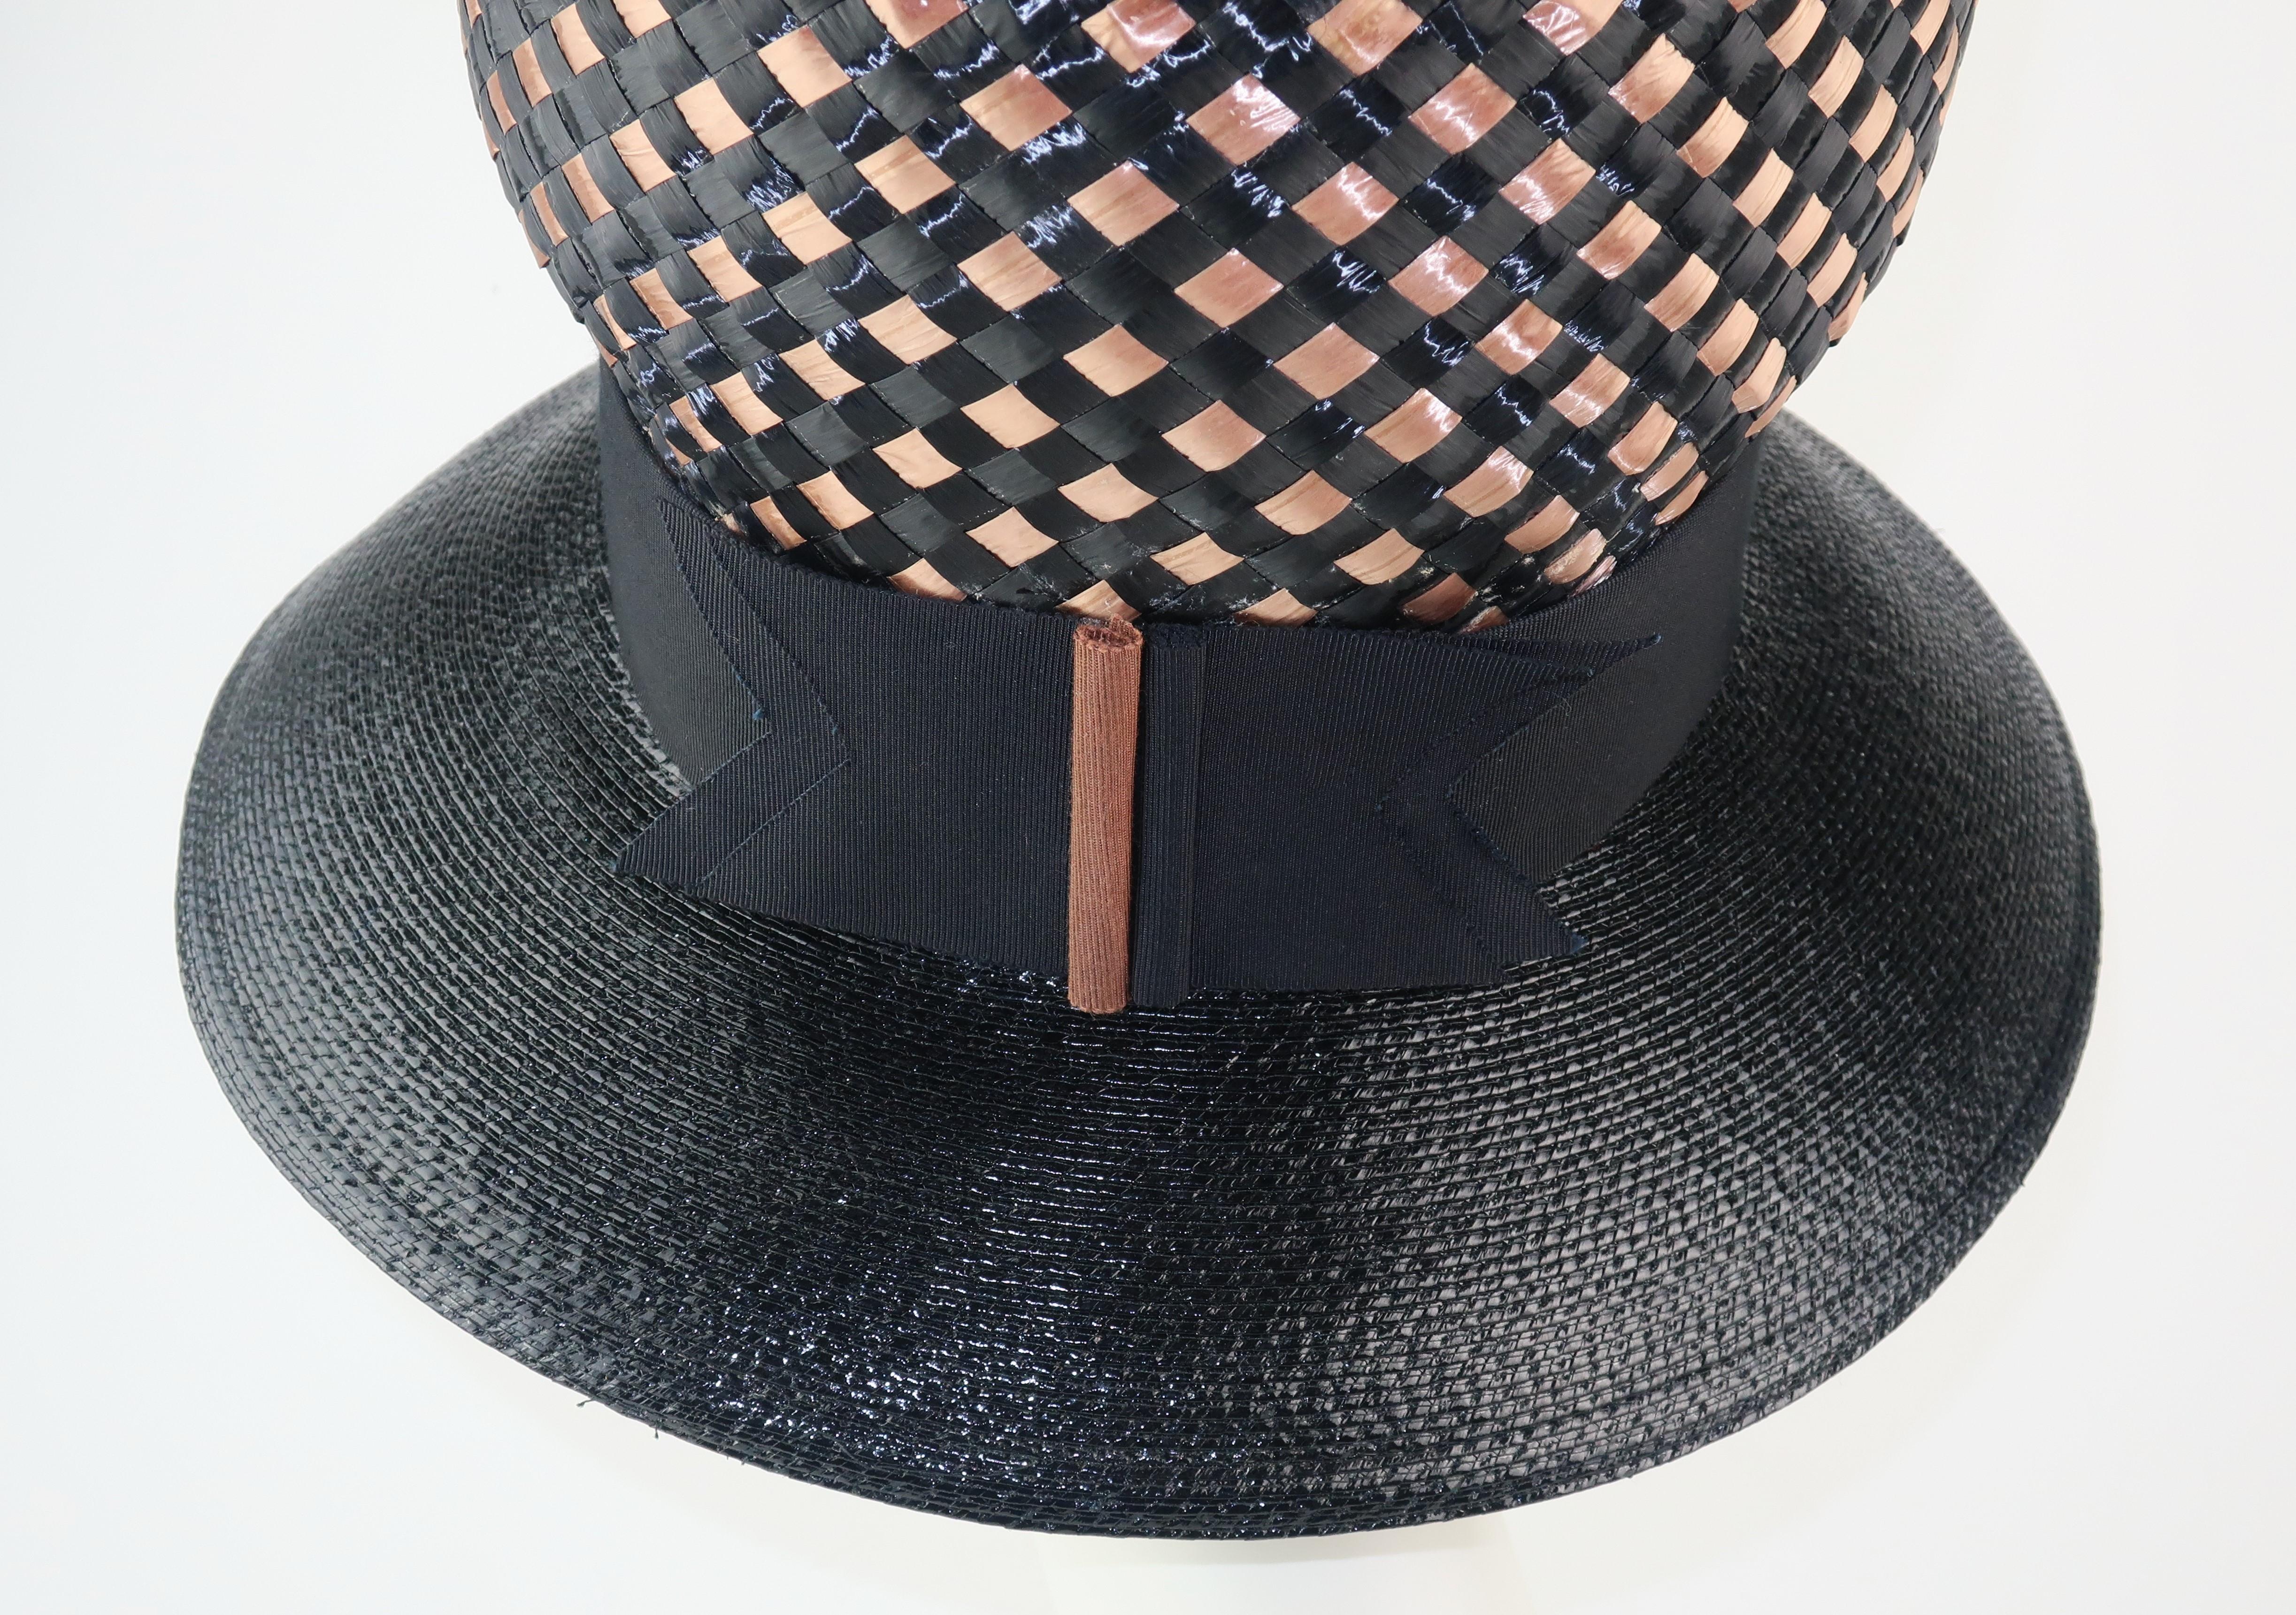 C.1960 Gwenn Pennington Beige & Black Straw Hat 1